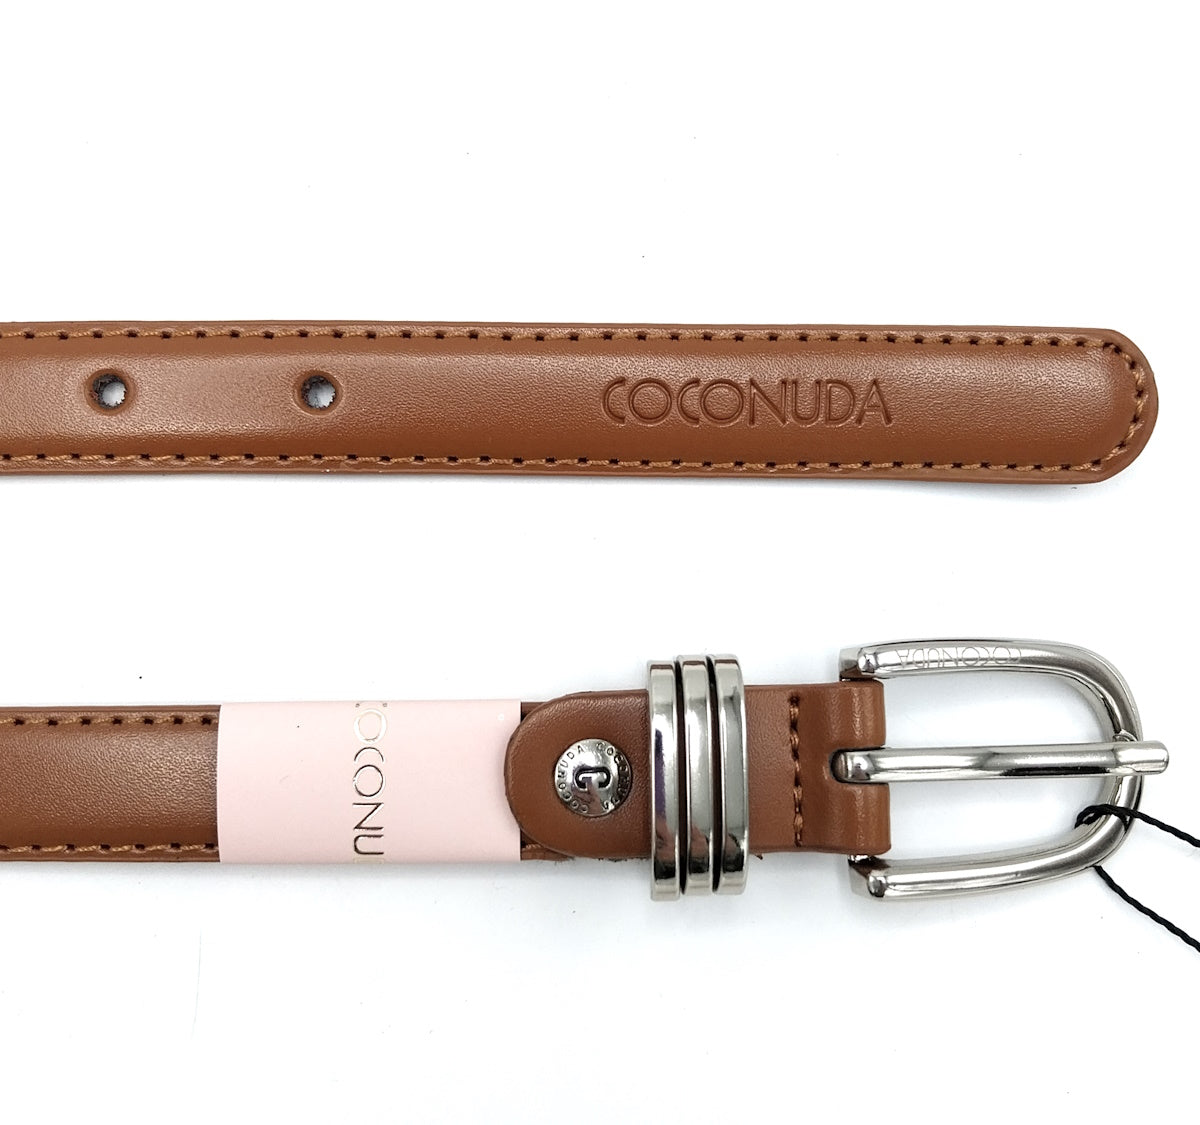 Genuine leather belt for women, Coconuda, art. IDK654/20